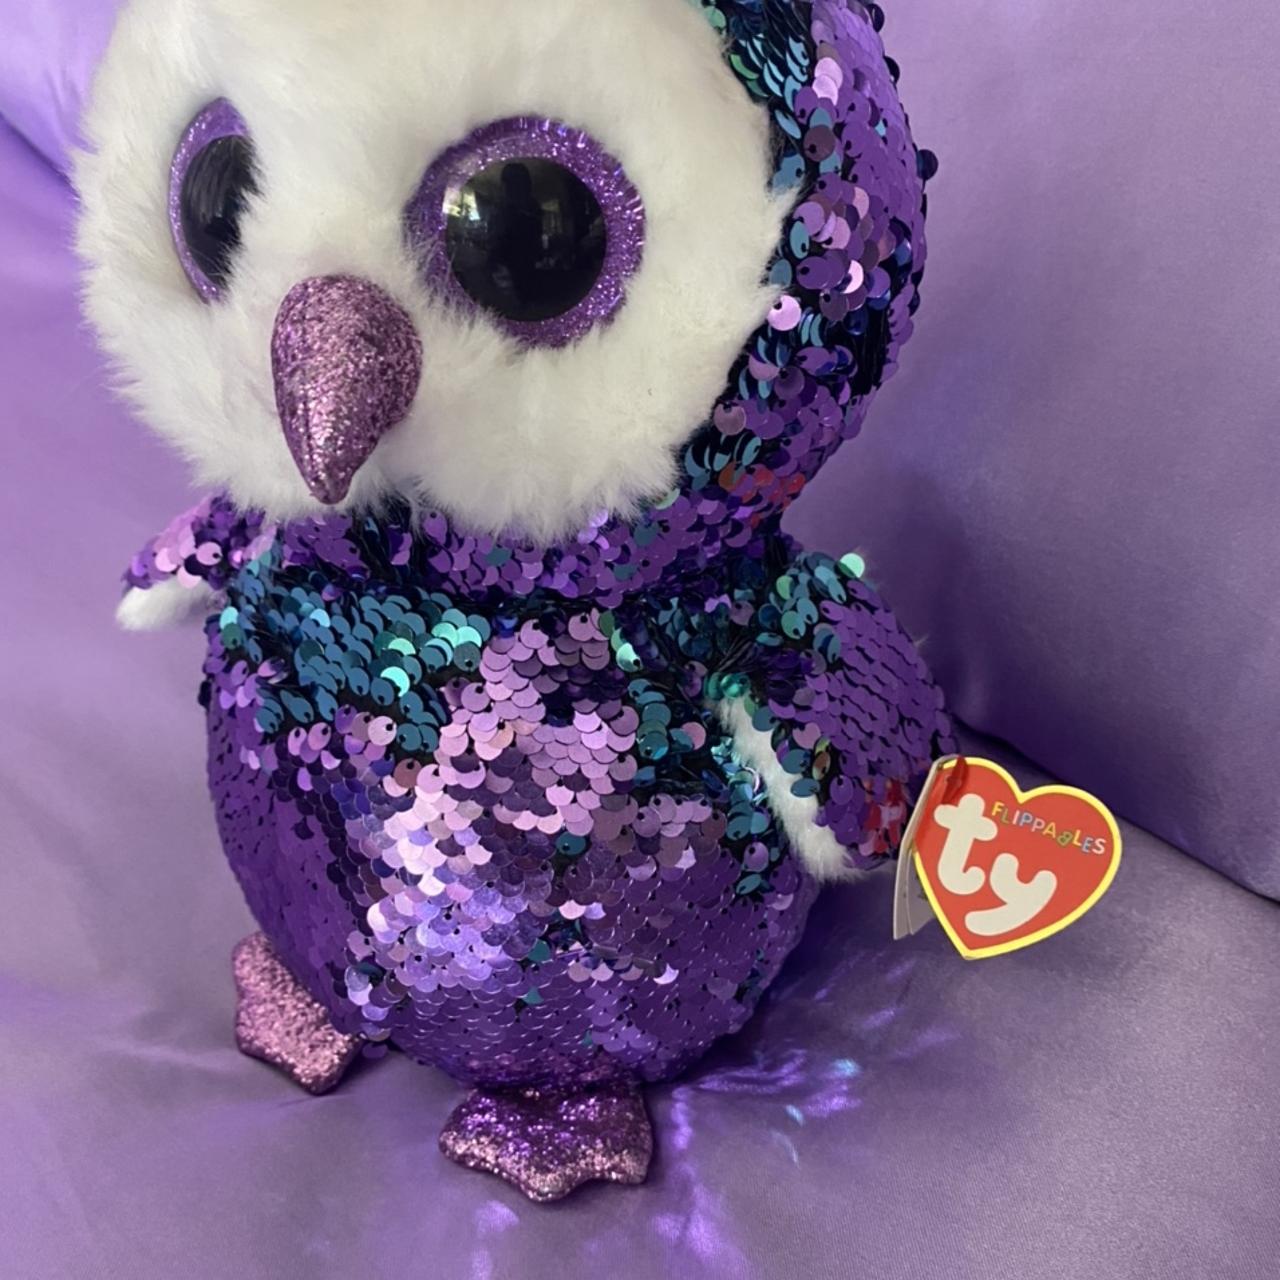 Ty Beanie Boos Moonlight The Purple Owl